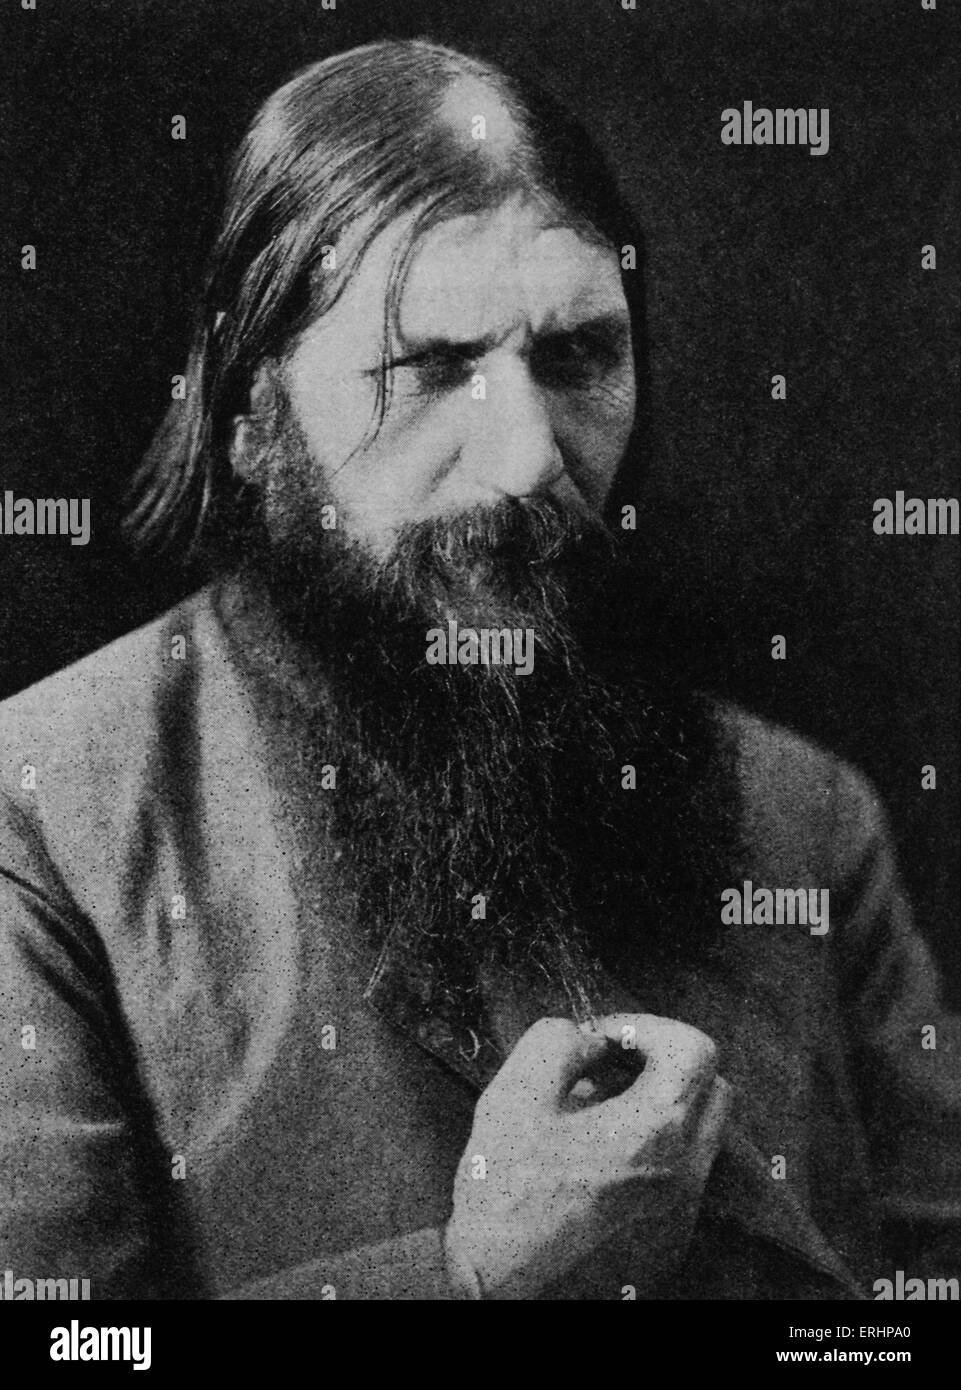 Grigori Rasputin - Russian mystic involved with last Tsar of Russia: 22 January 1869 - 19 December 1916. Photograph in Bookman, Stock Photo